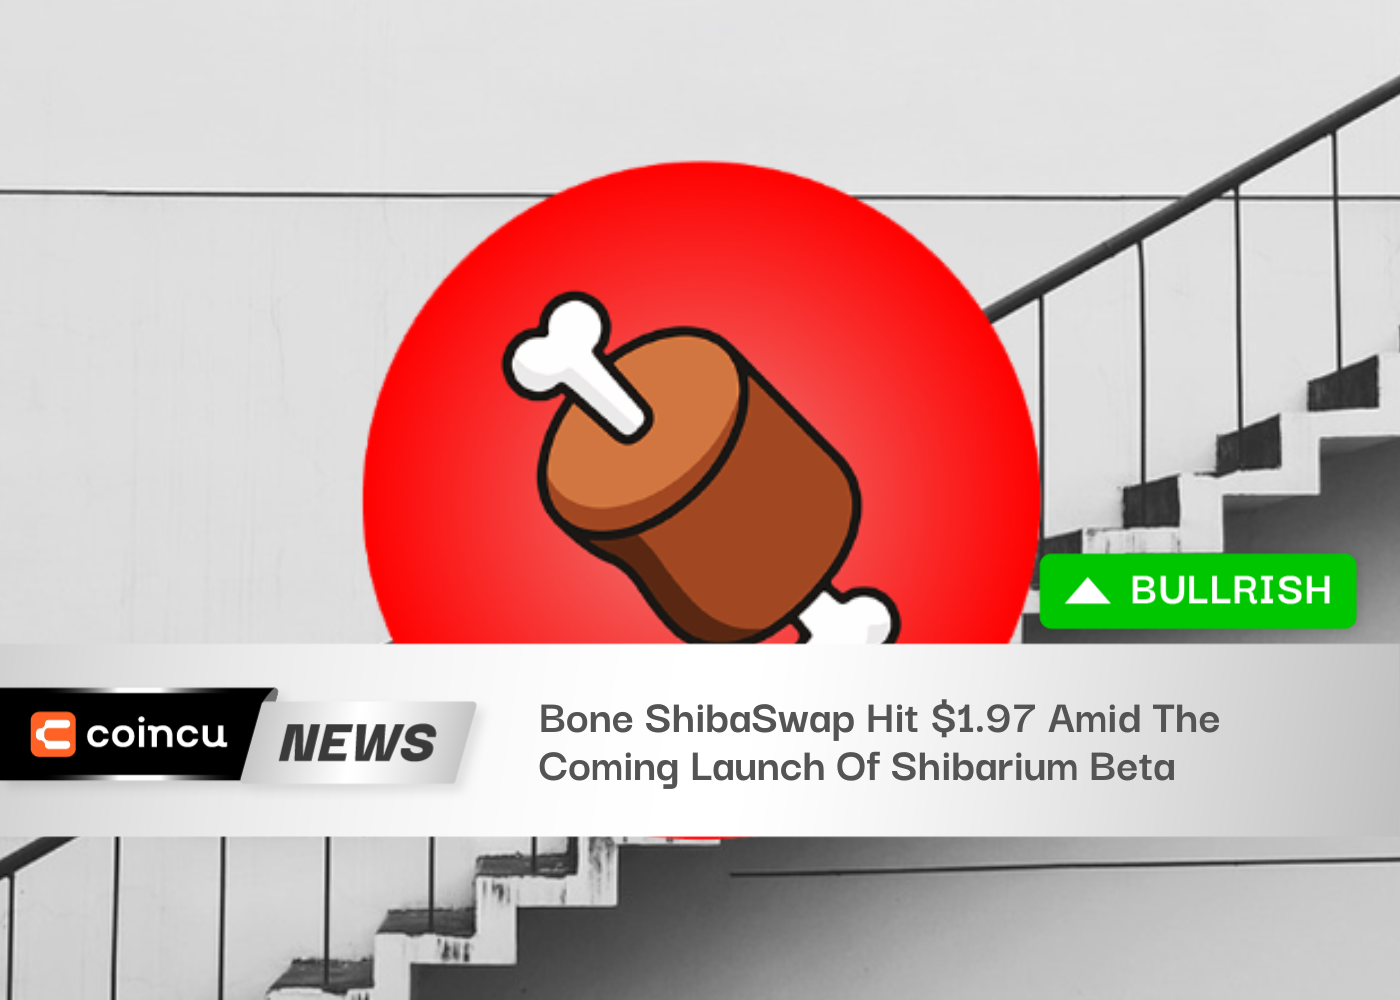 Bone ShibaSwap Hit $1.97 Amid The Coming Launch Of Shibarium Beta